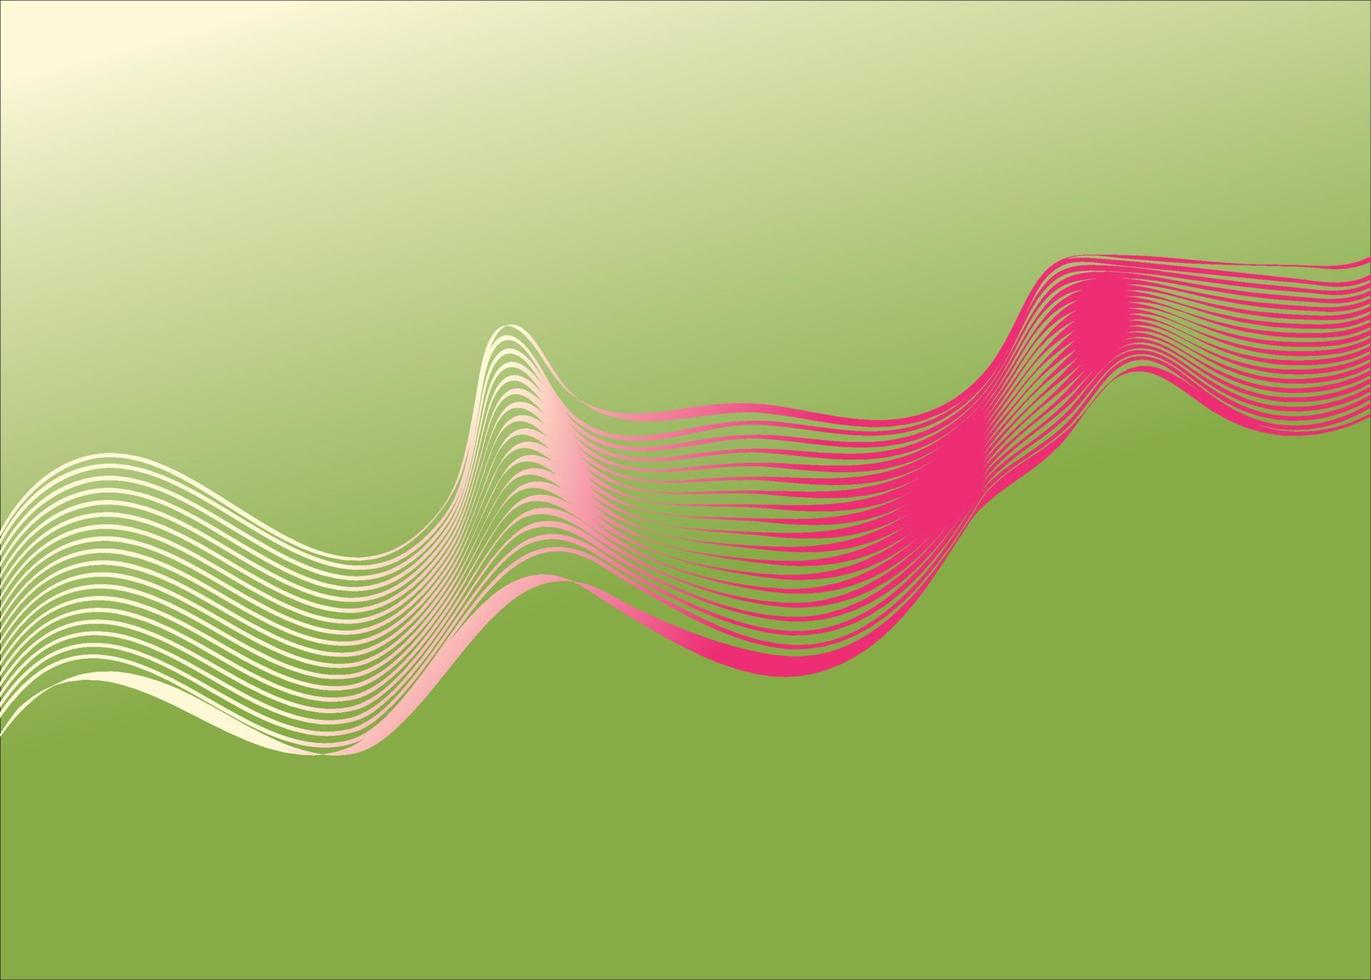 slät rosa Vinka av rader med en lutning på en grön bakgrund. dynamisk ljud Vinka. optisk konst design element. vektor bakgrund.